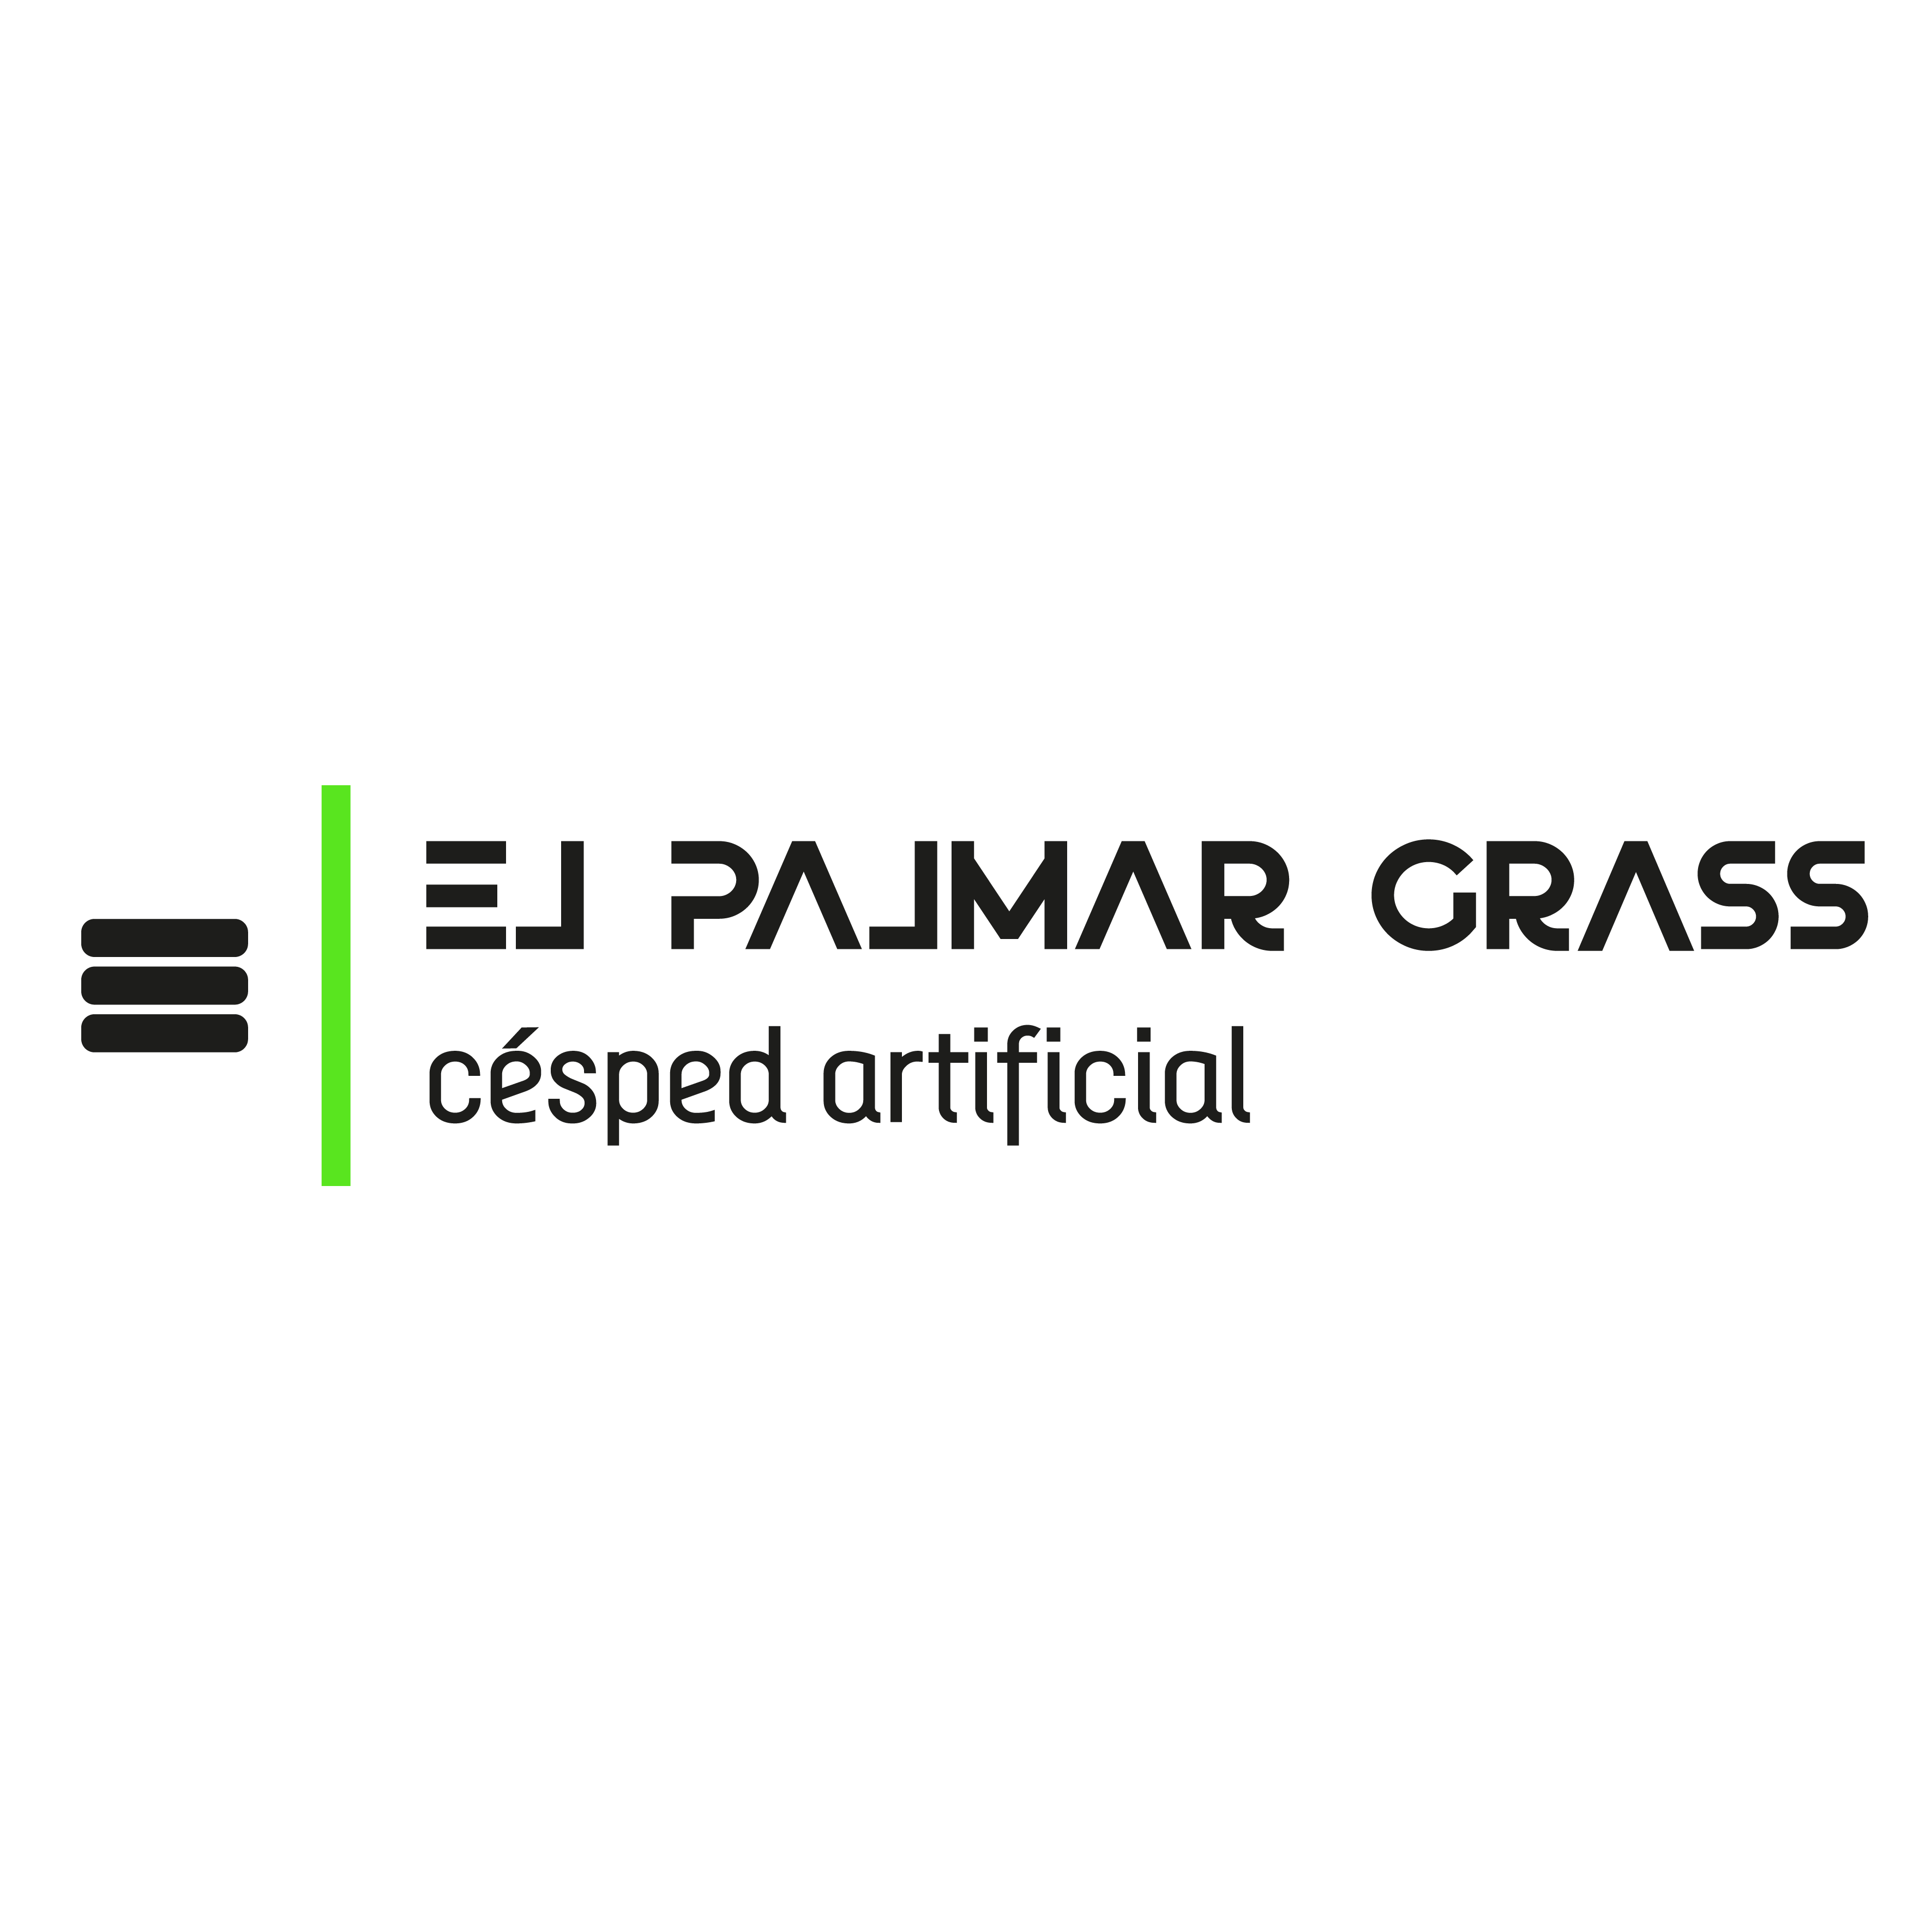 El Palmar Grass Logo